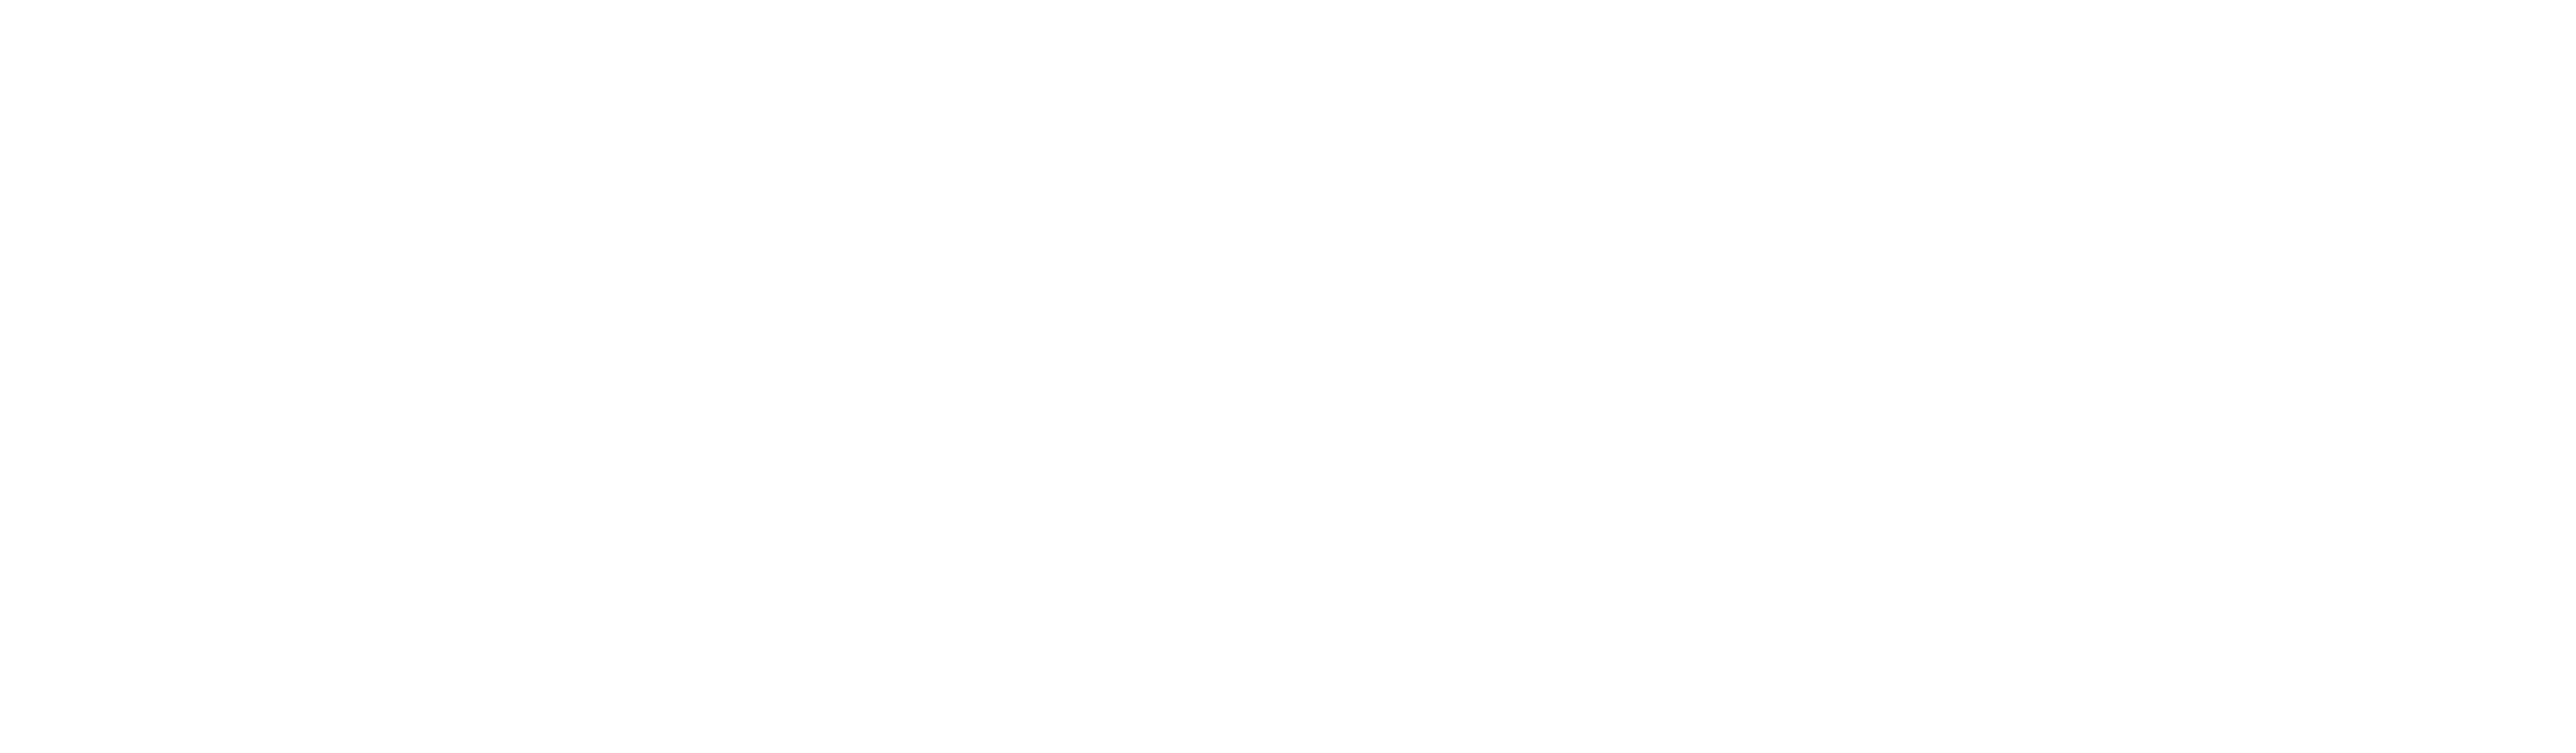 Martha Speaks logo